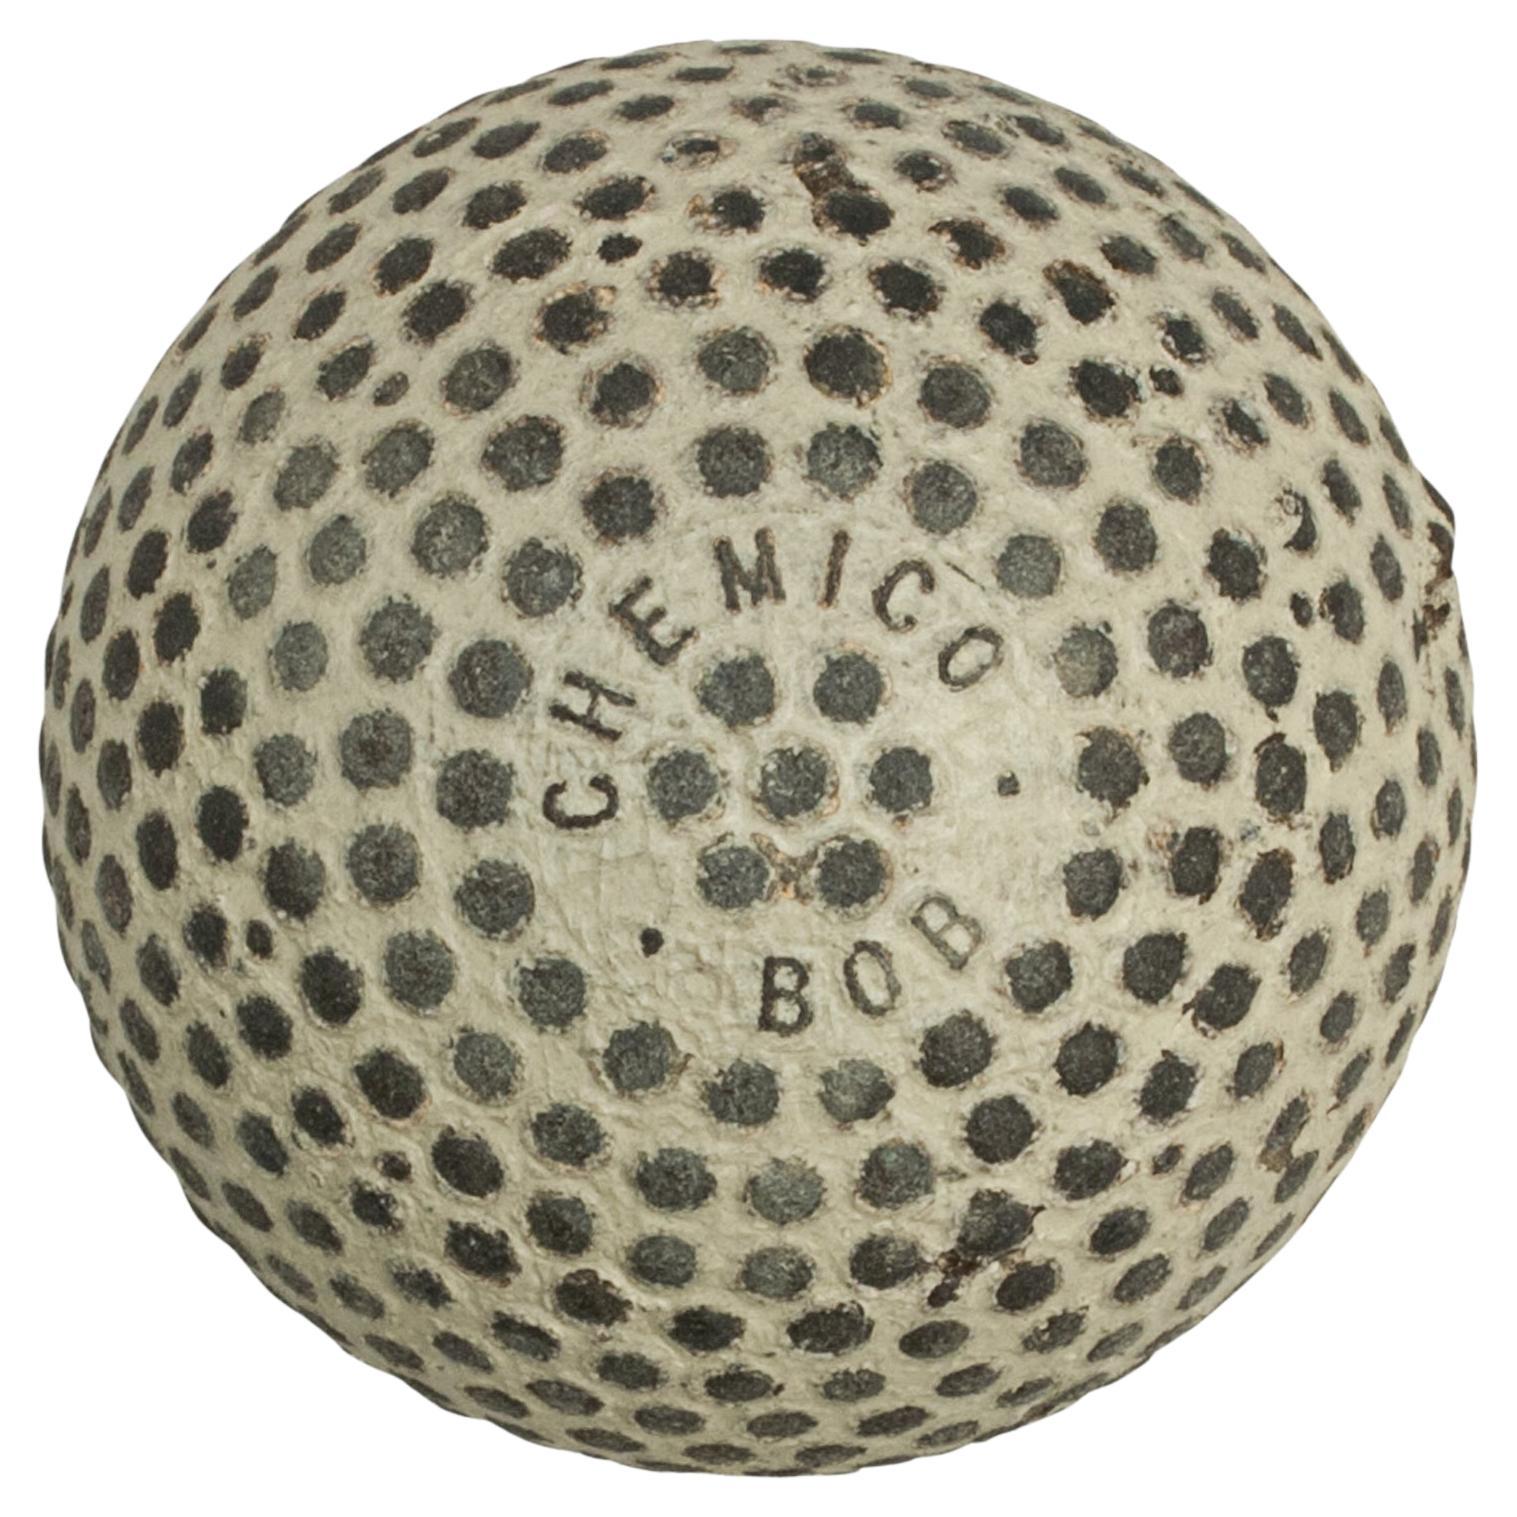 Vintage Chemico Bob Golf Ball, Bramble Pattern